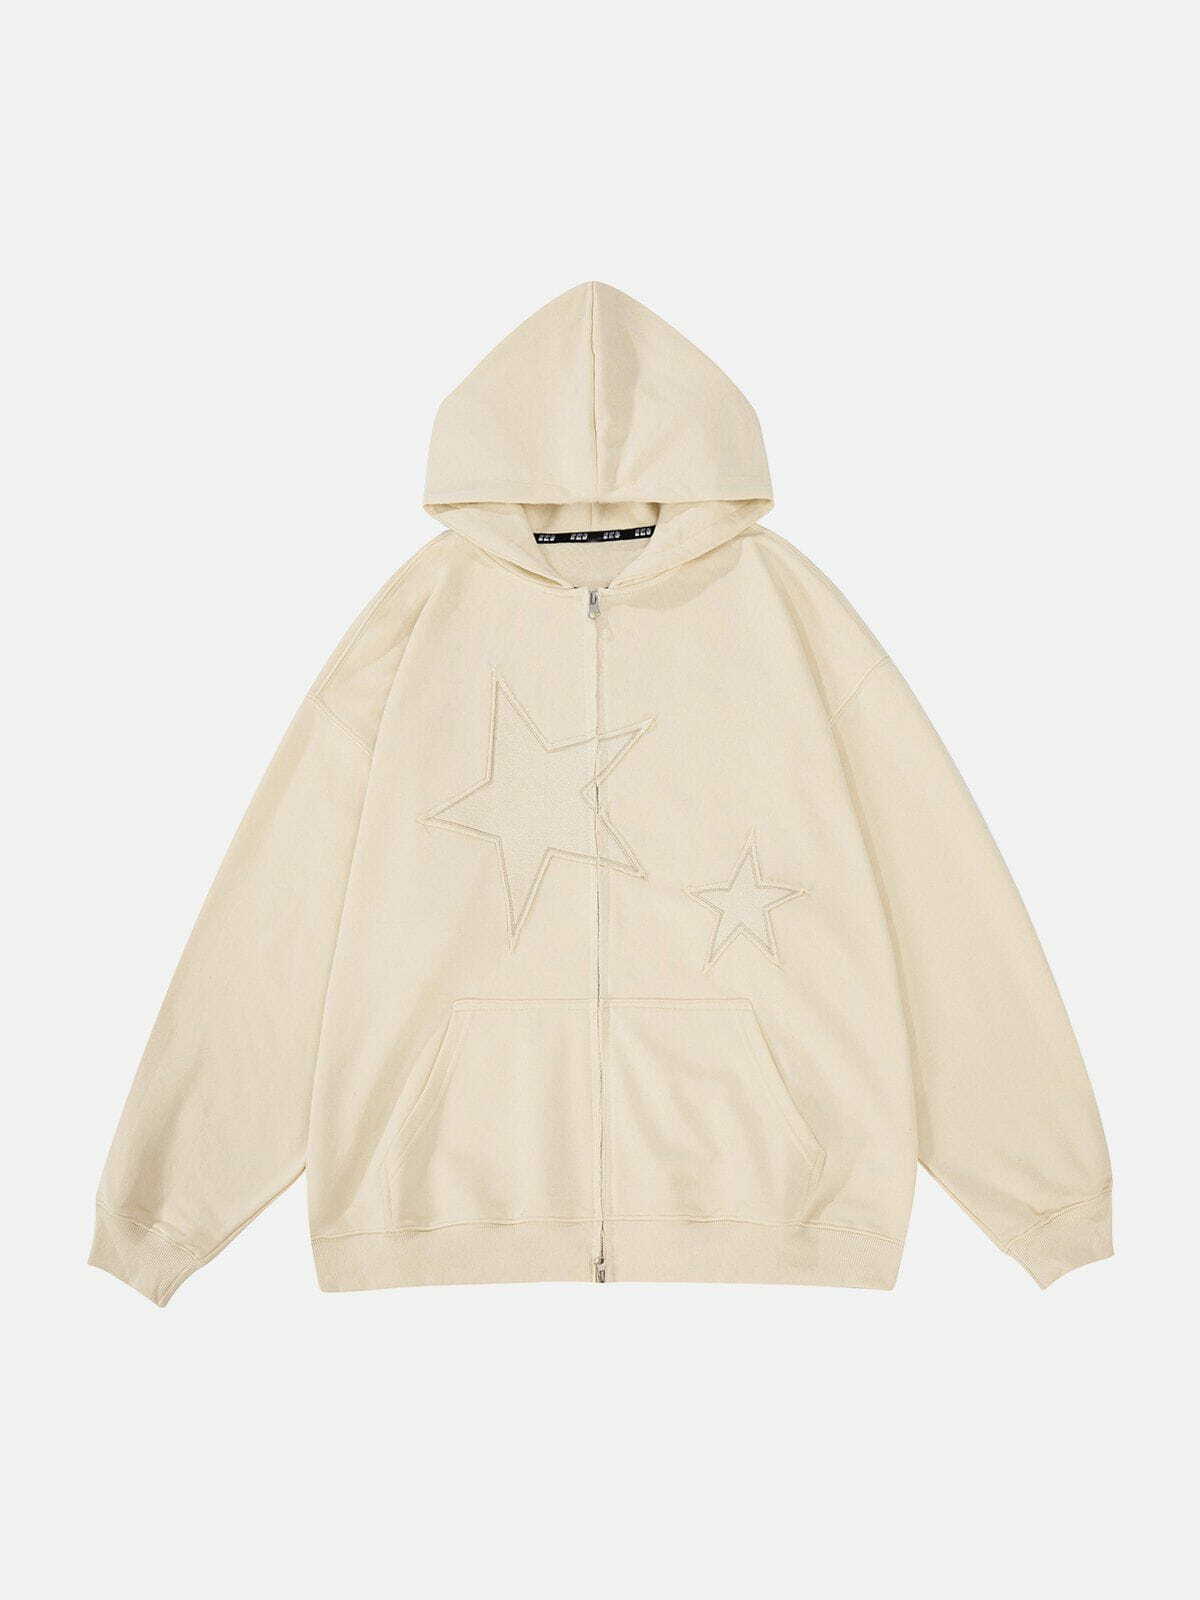 star patchwork hoodie edgy & vibrant streetwear statement 3791